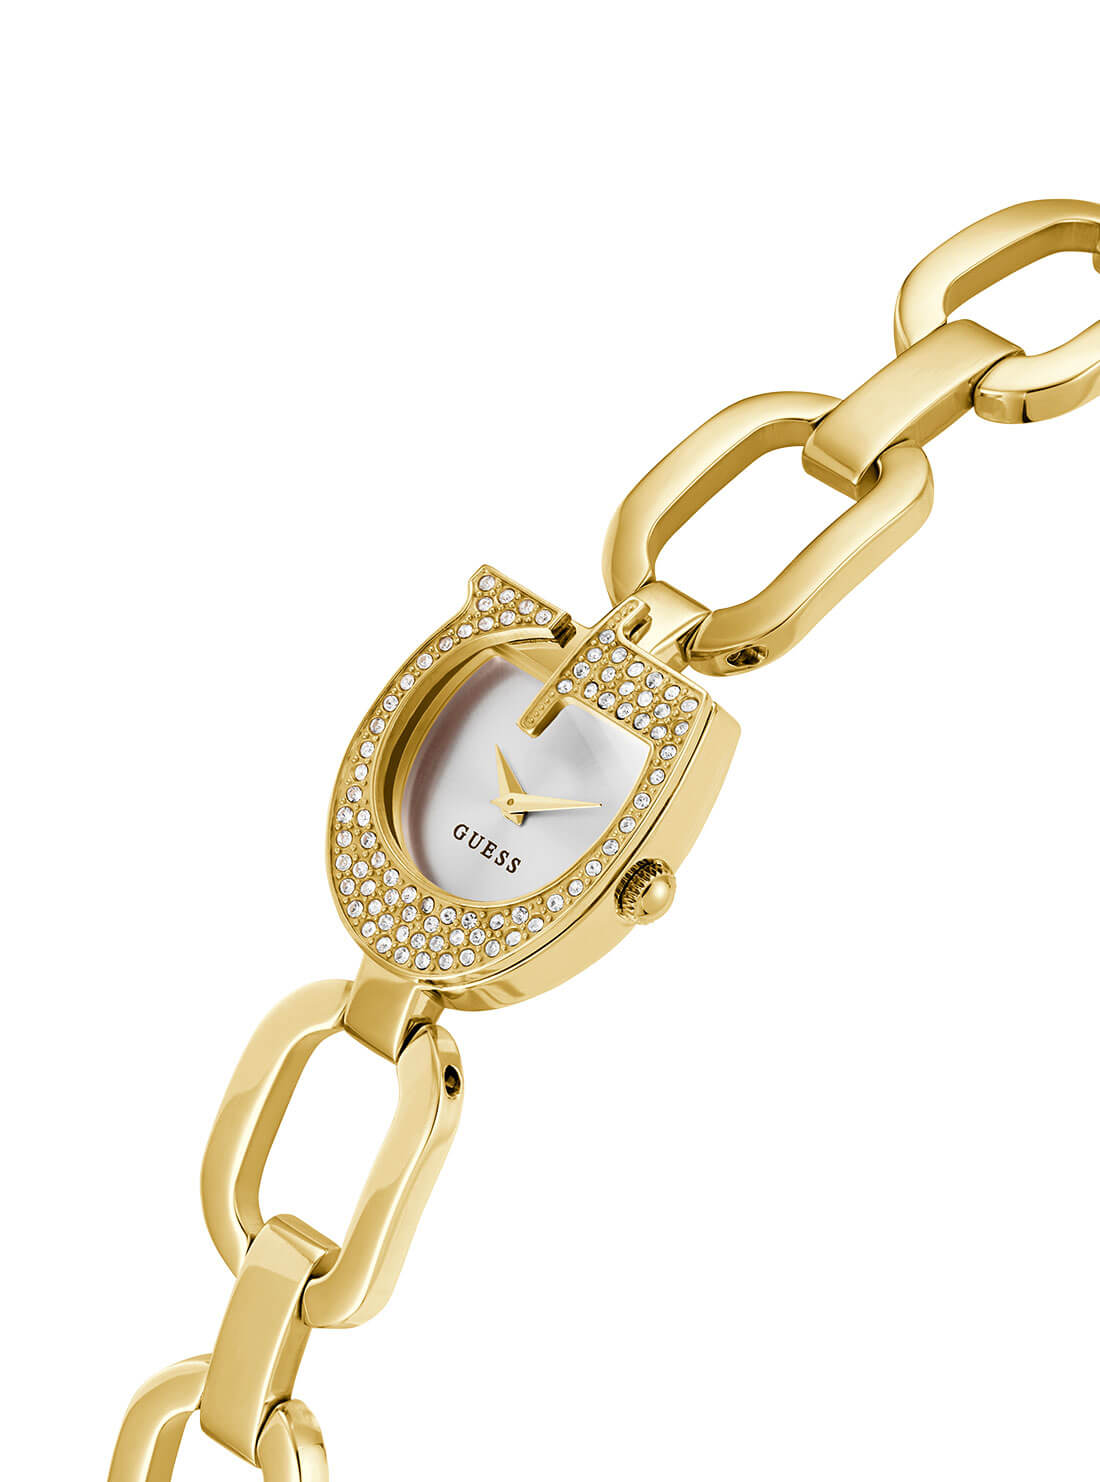 Gold Gia Logo Link Bracelet Watch | GUESS Women's Watches | detail view